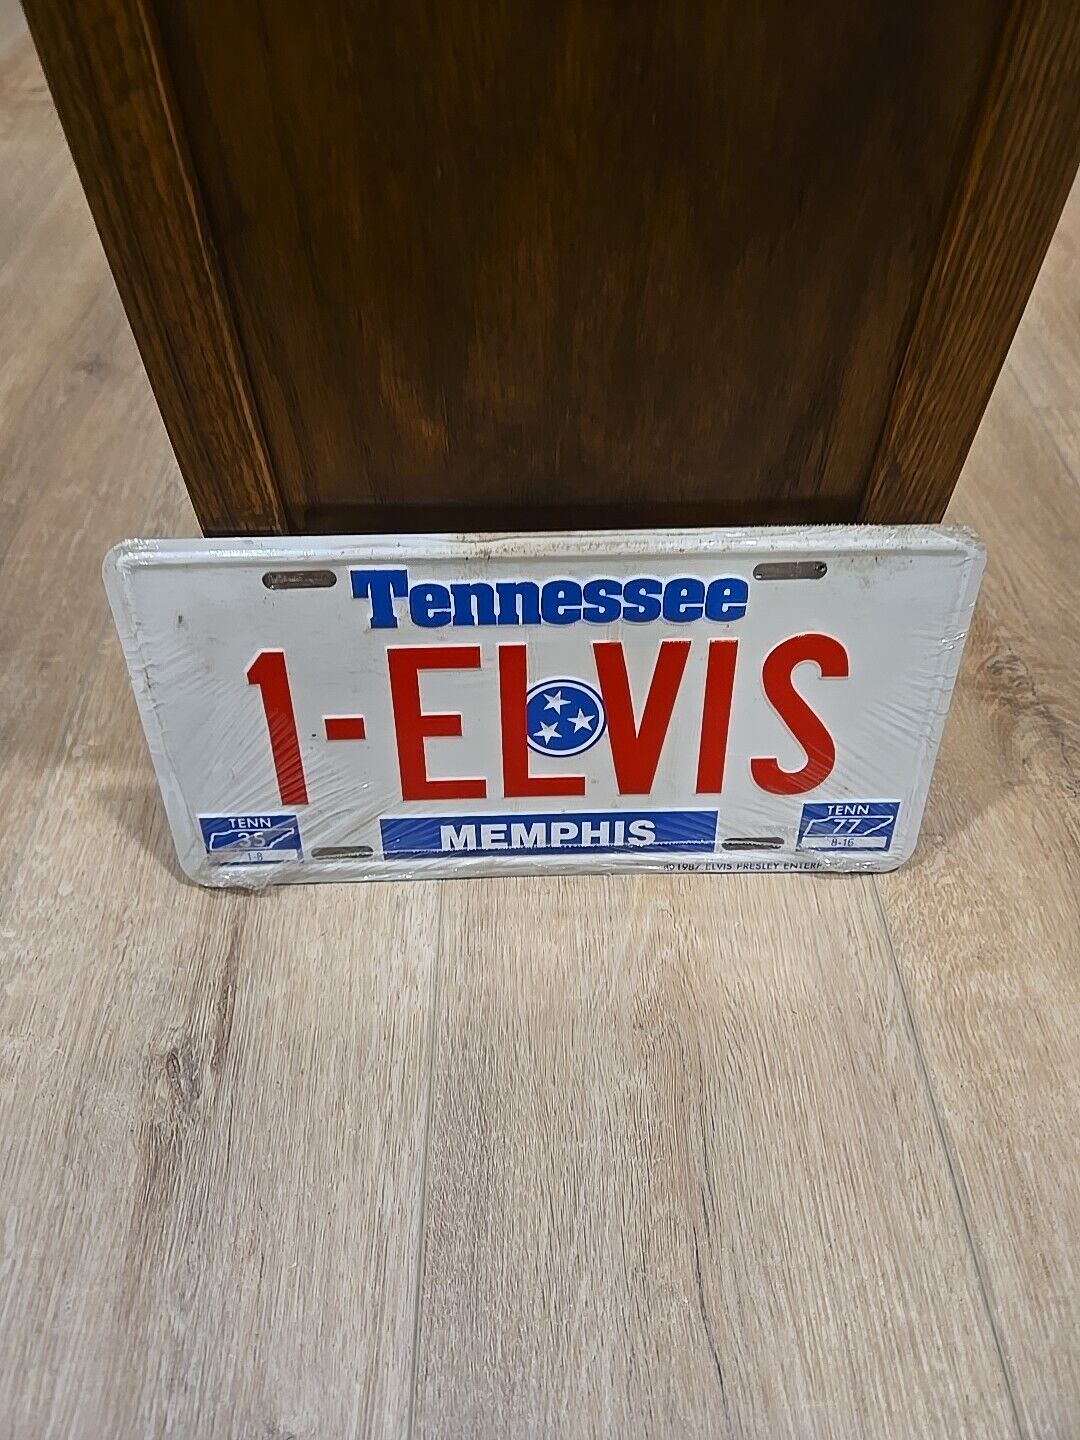 vtg Elvis Presley License Plate Memphis Tennessee 1-ELVIS 1987 New Sealed